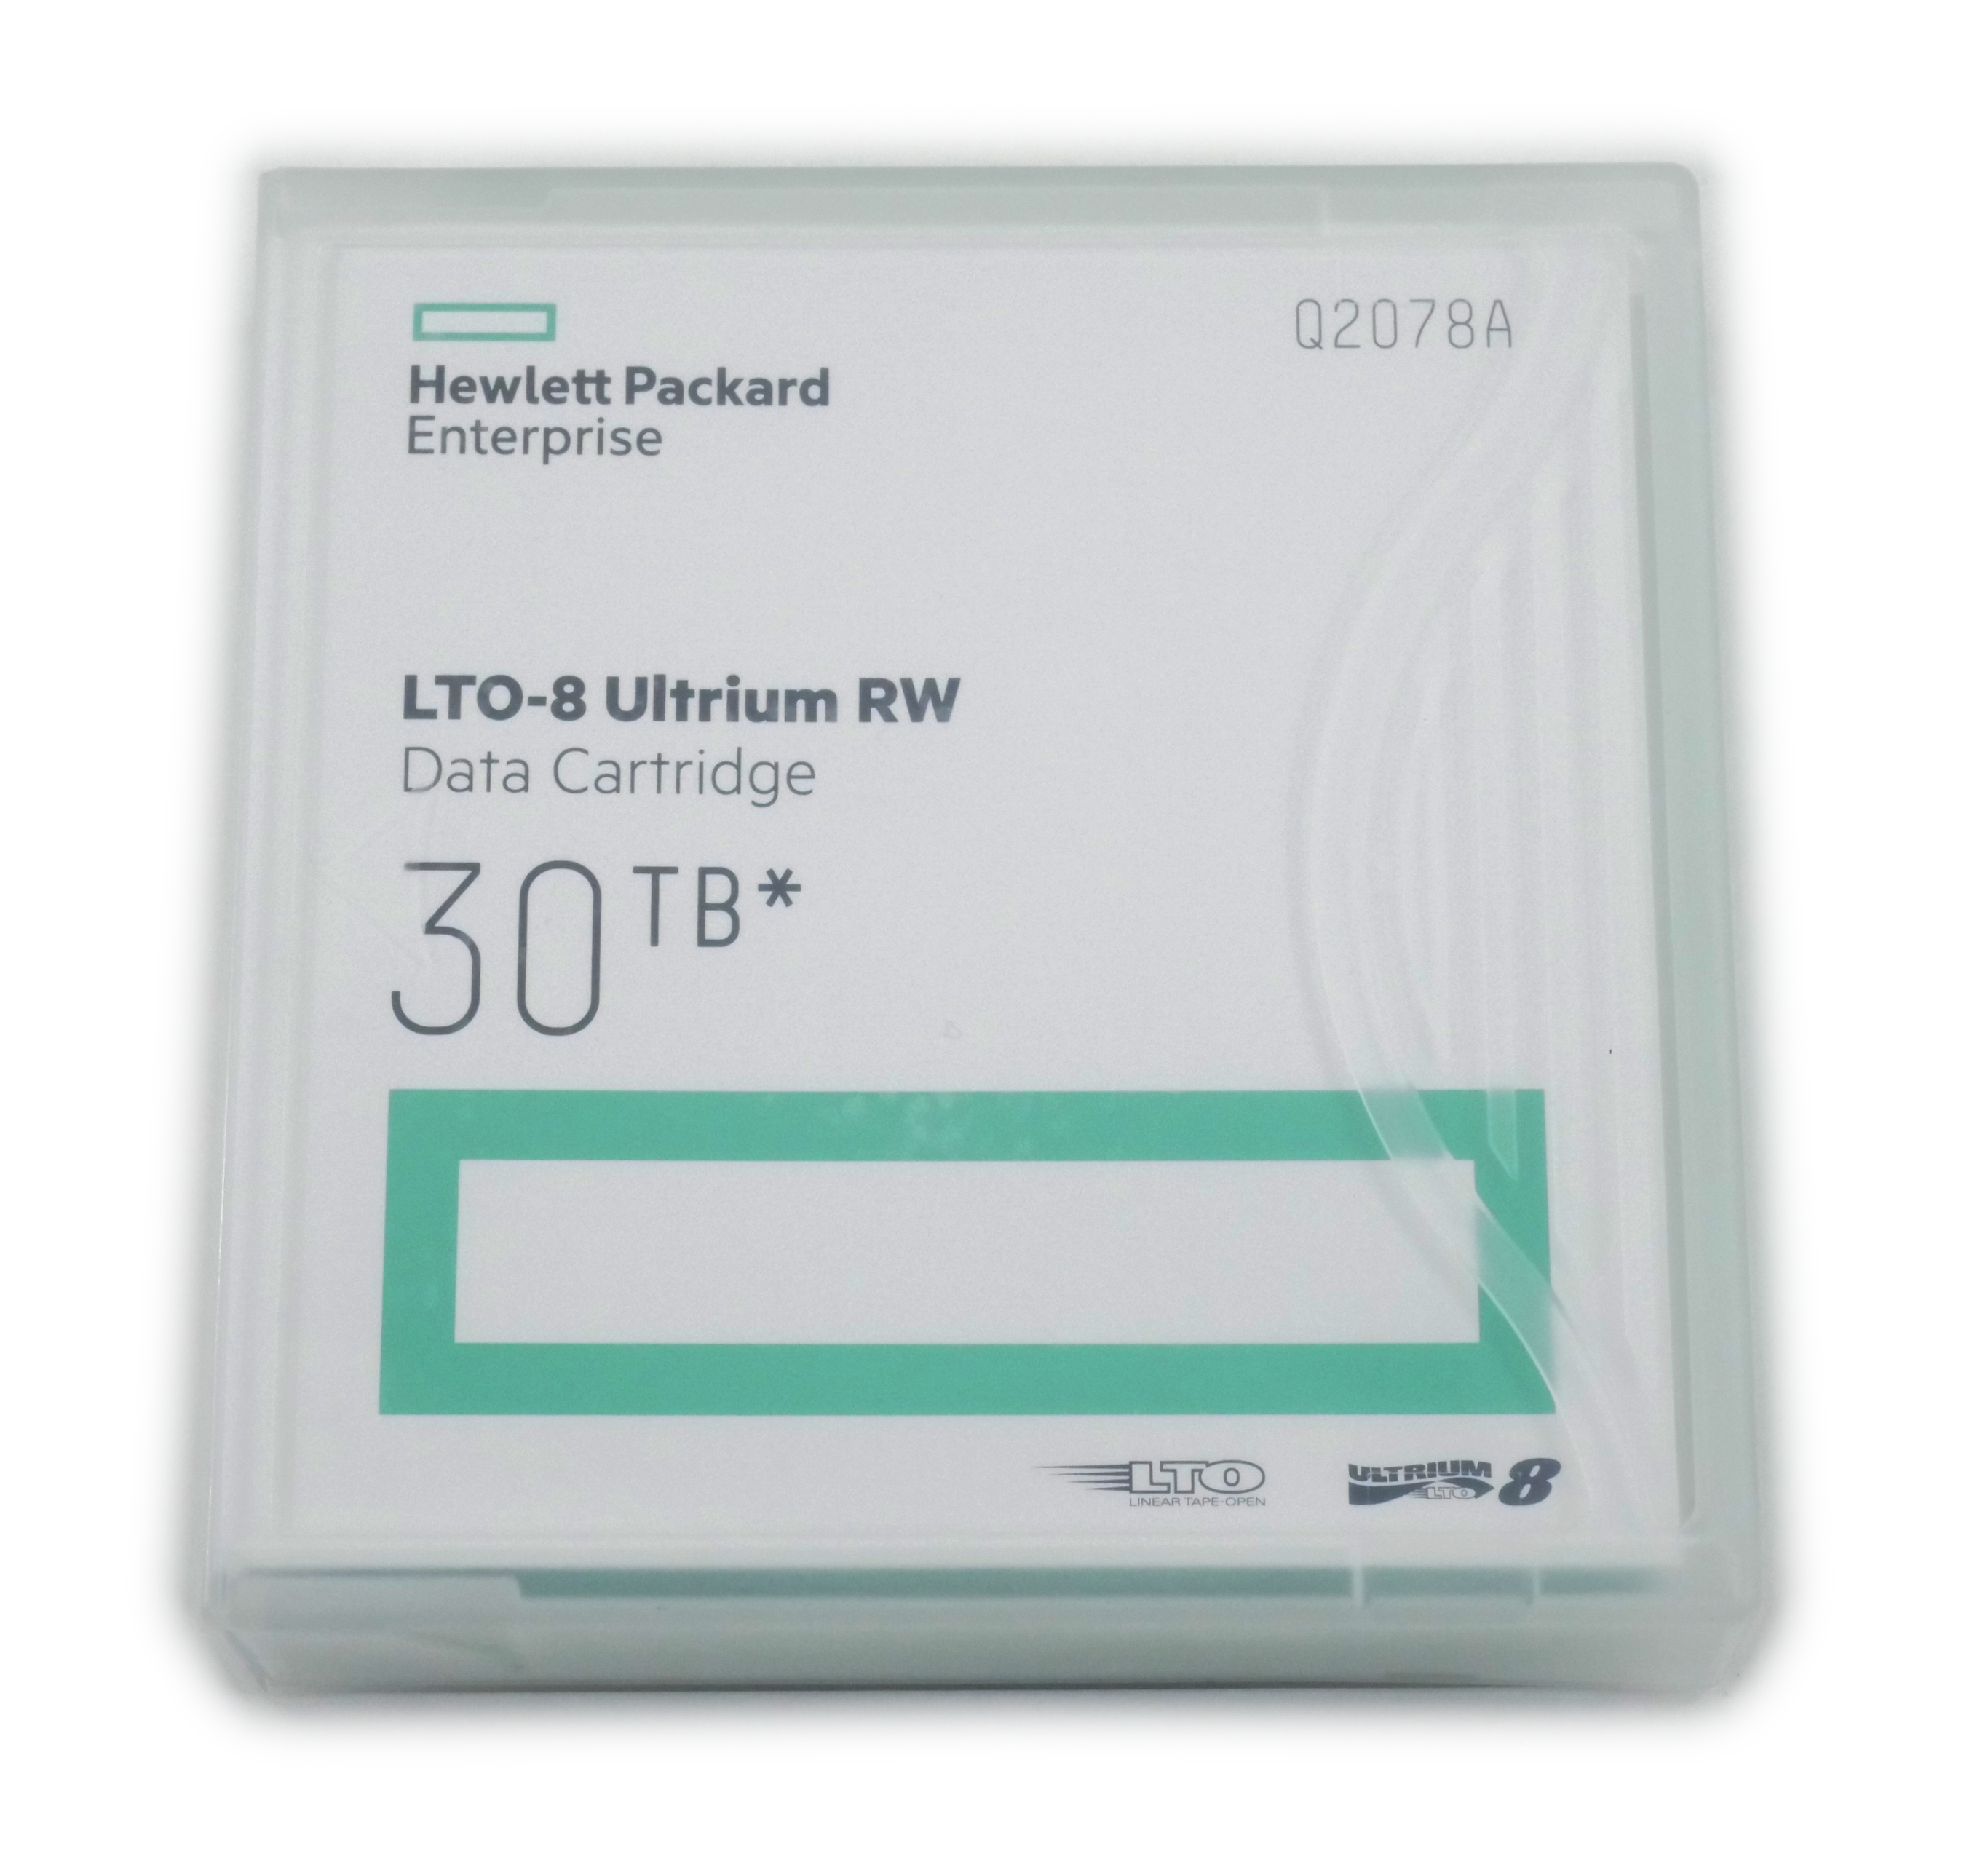 HPE LTO-8 Ultrium 30TB RW Data Cartridge Storage Media Q2078A